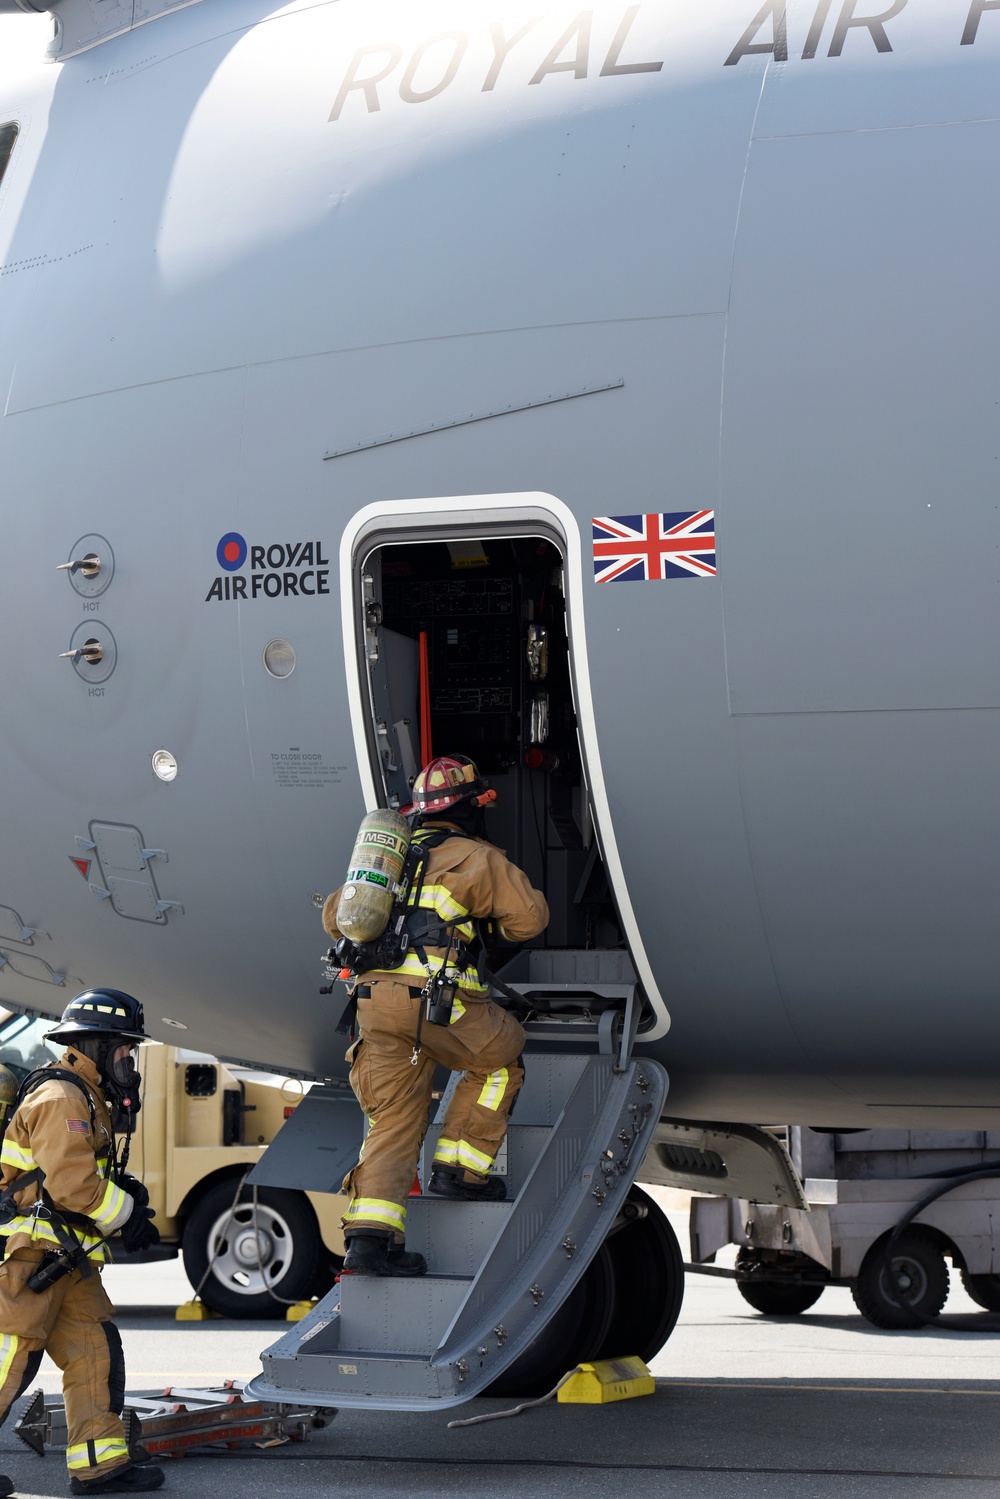 United effort: U.S., UK, Qatar test emergency response procedures